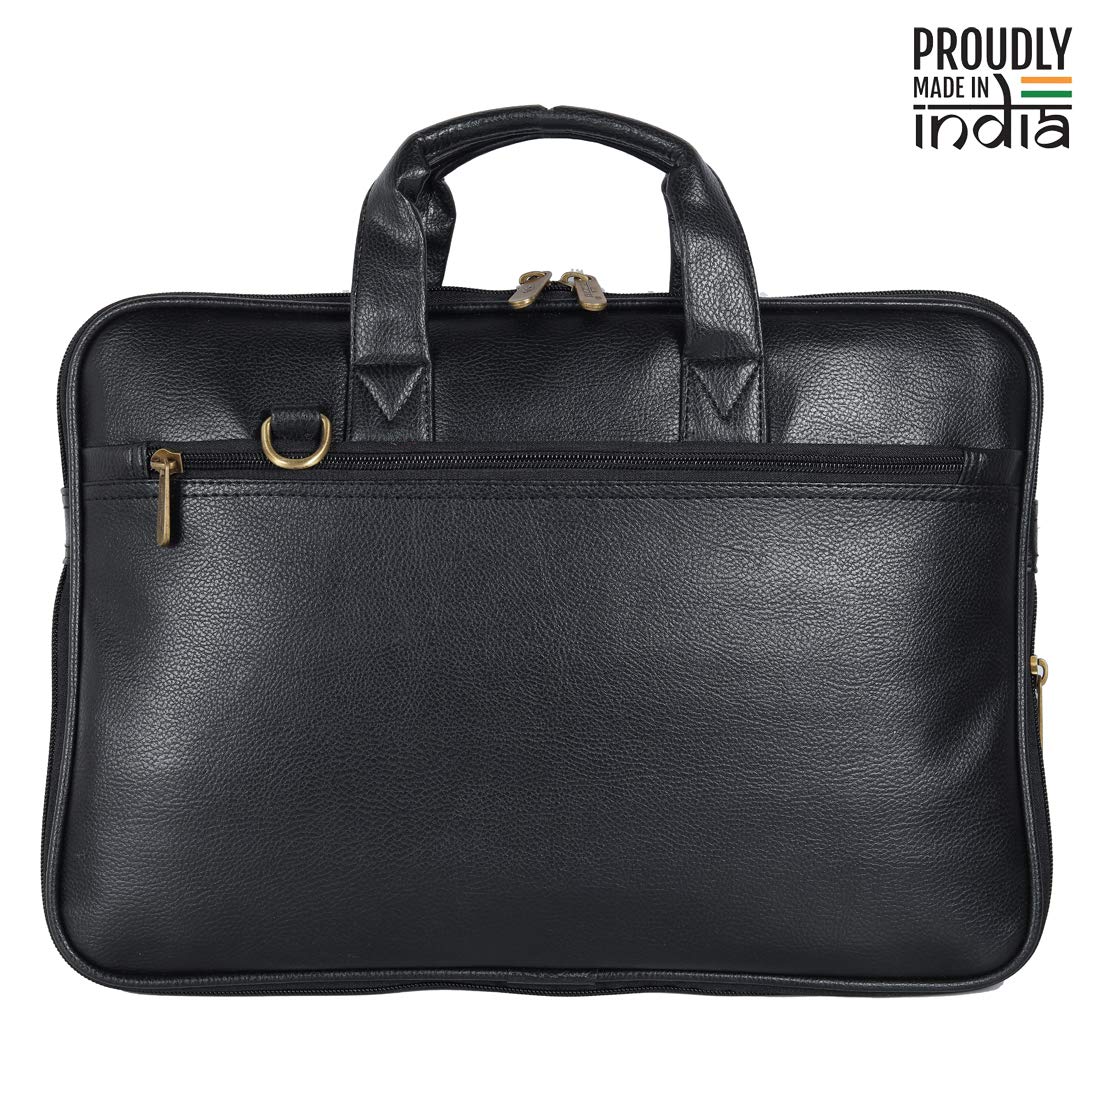 The Clownfish Faux Leather Expandable Laptop Tablet Messenger Bag Briefcase Black 15.6 inch